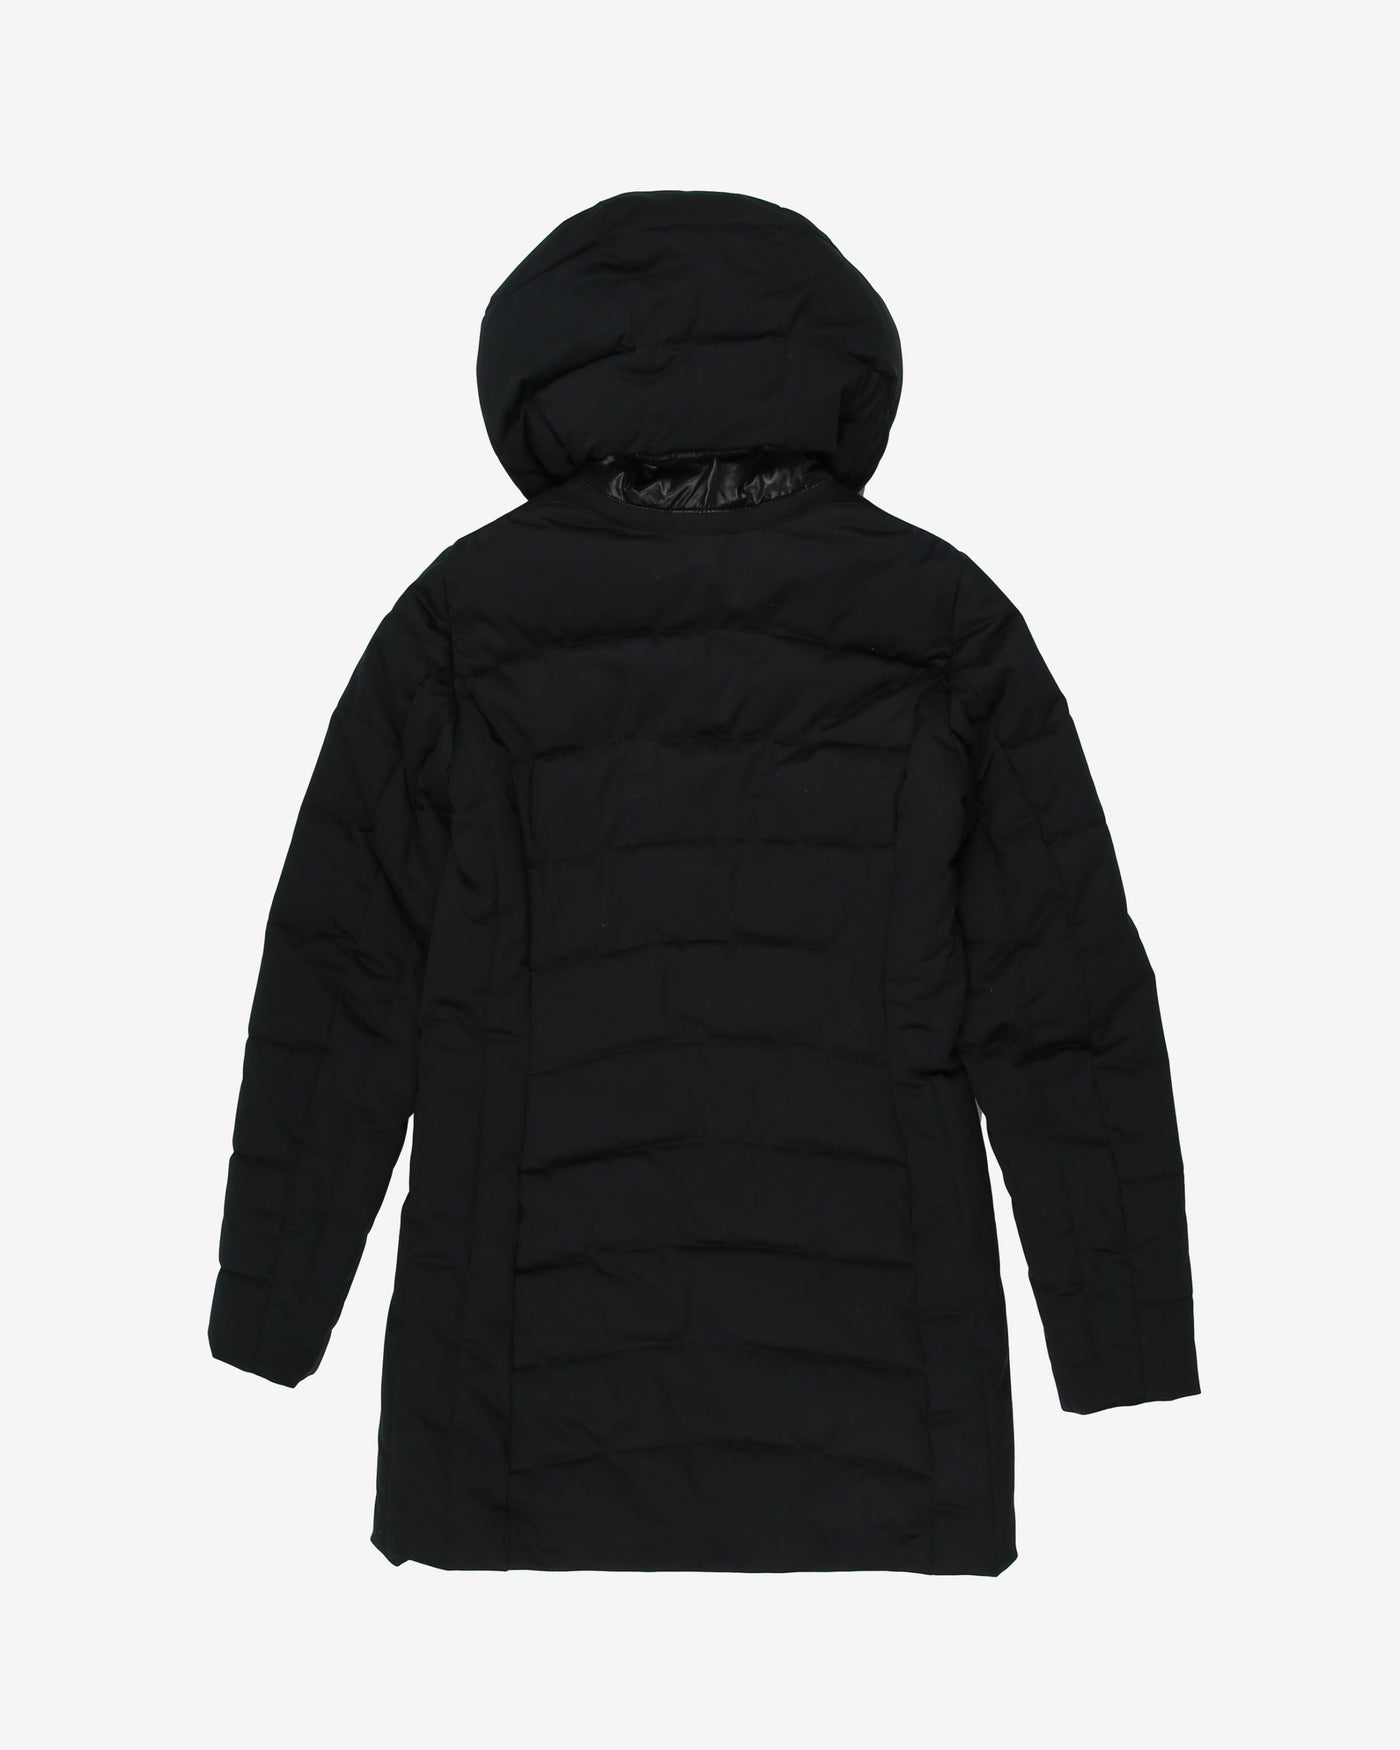 Geox puffa jacket in black - XS